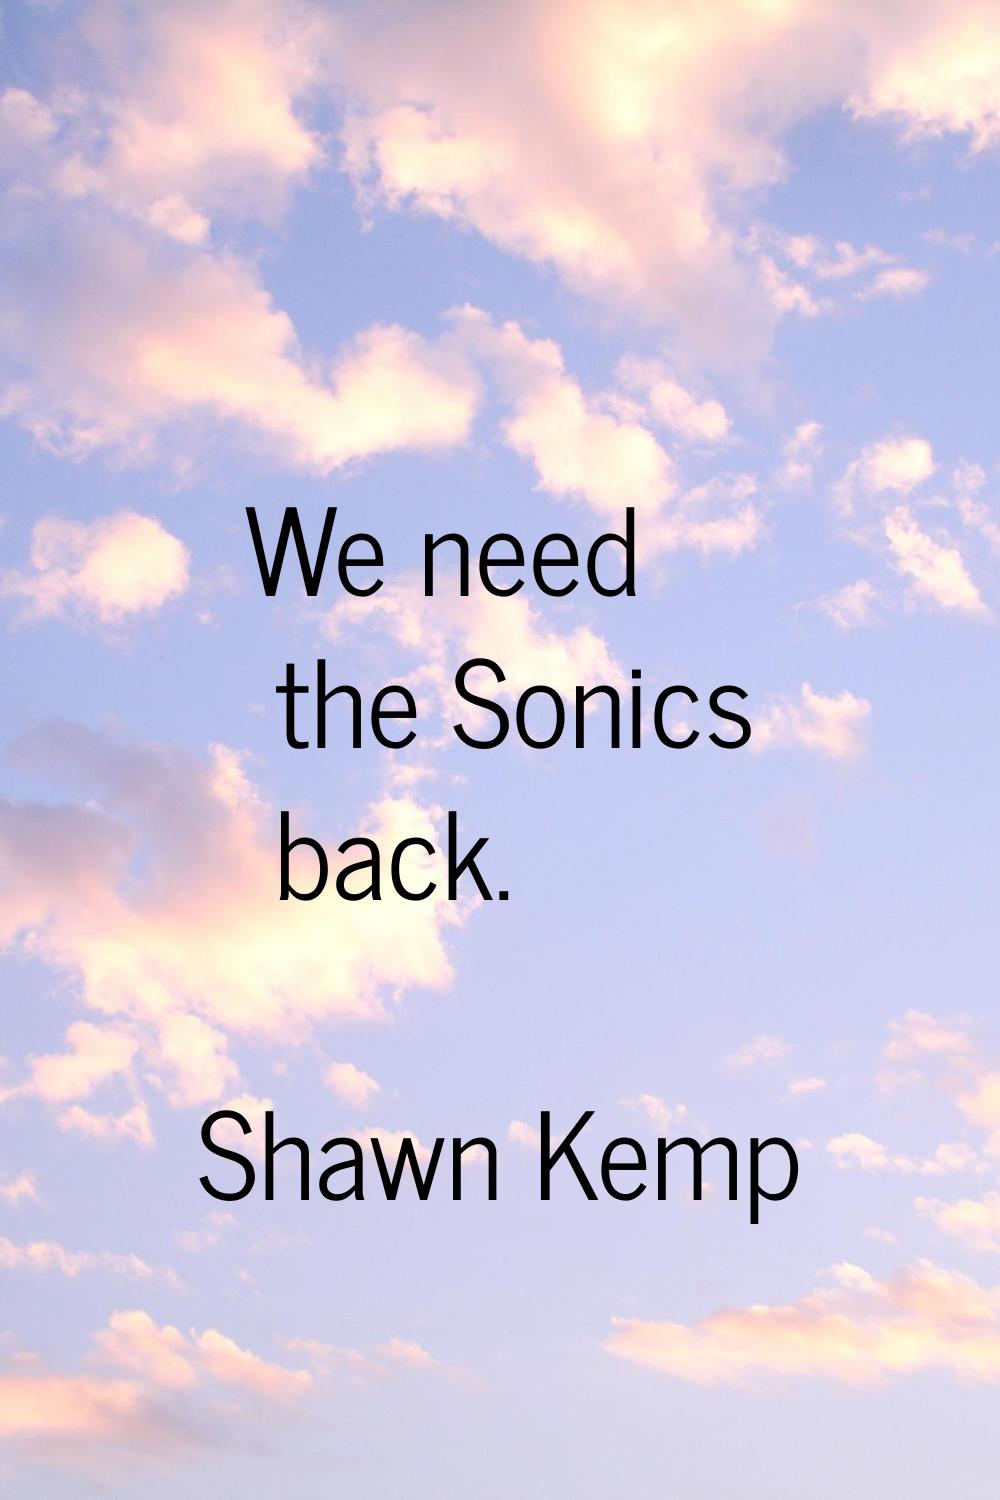 We need the Sonics back.